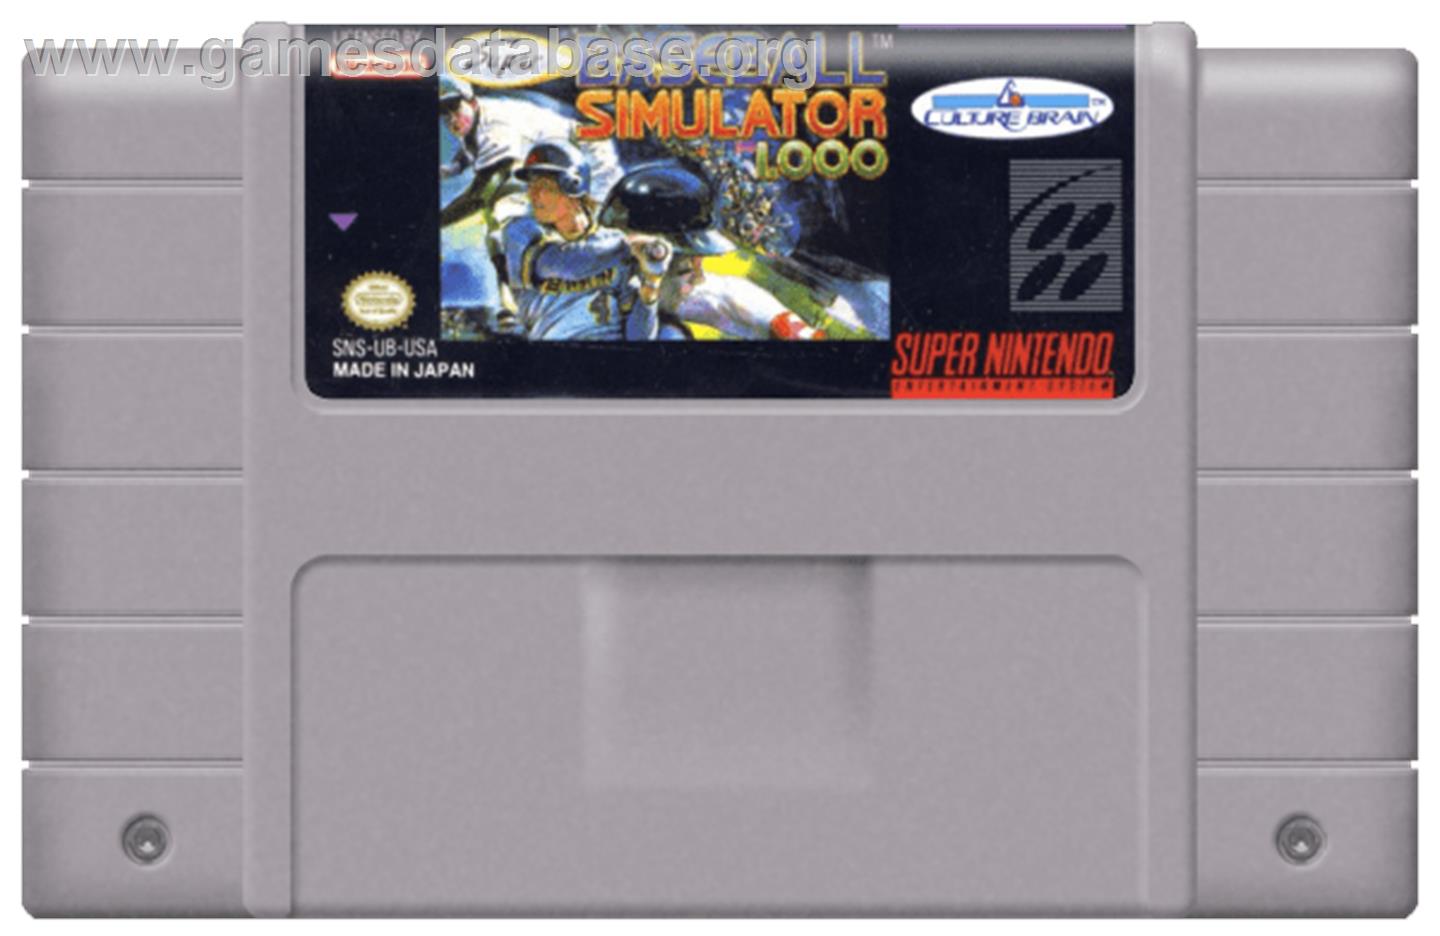 Super Baseball Simulator 1.000 - Nintendo SNES - Artwork - Cartridge